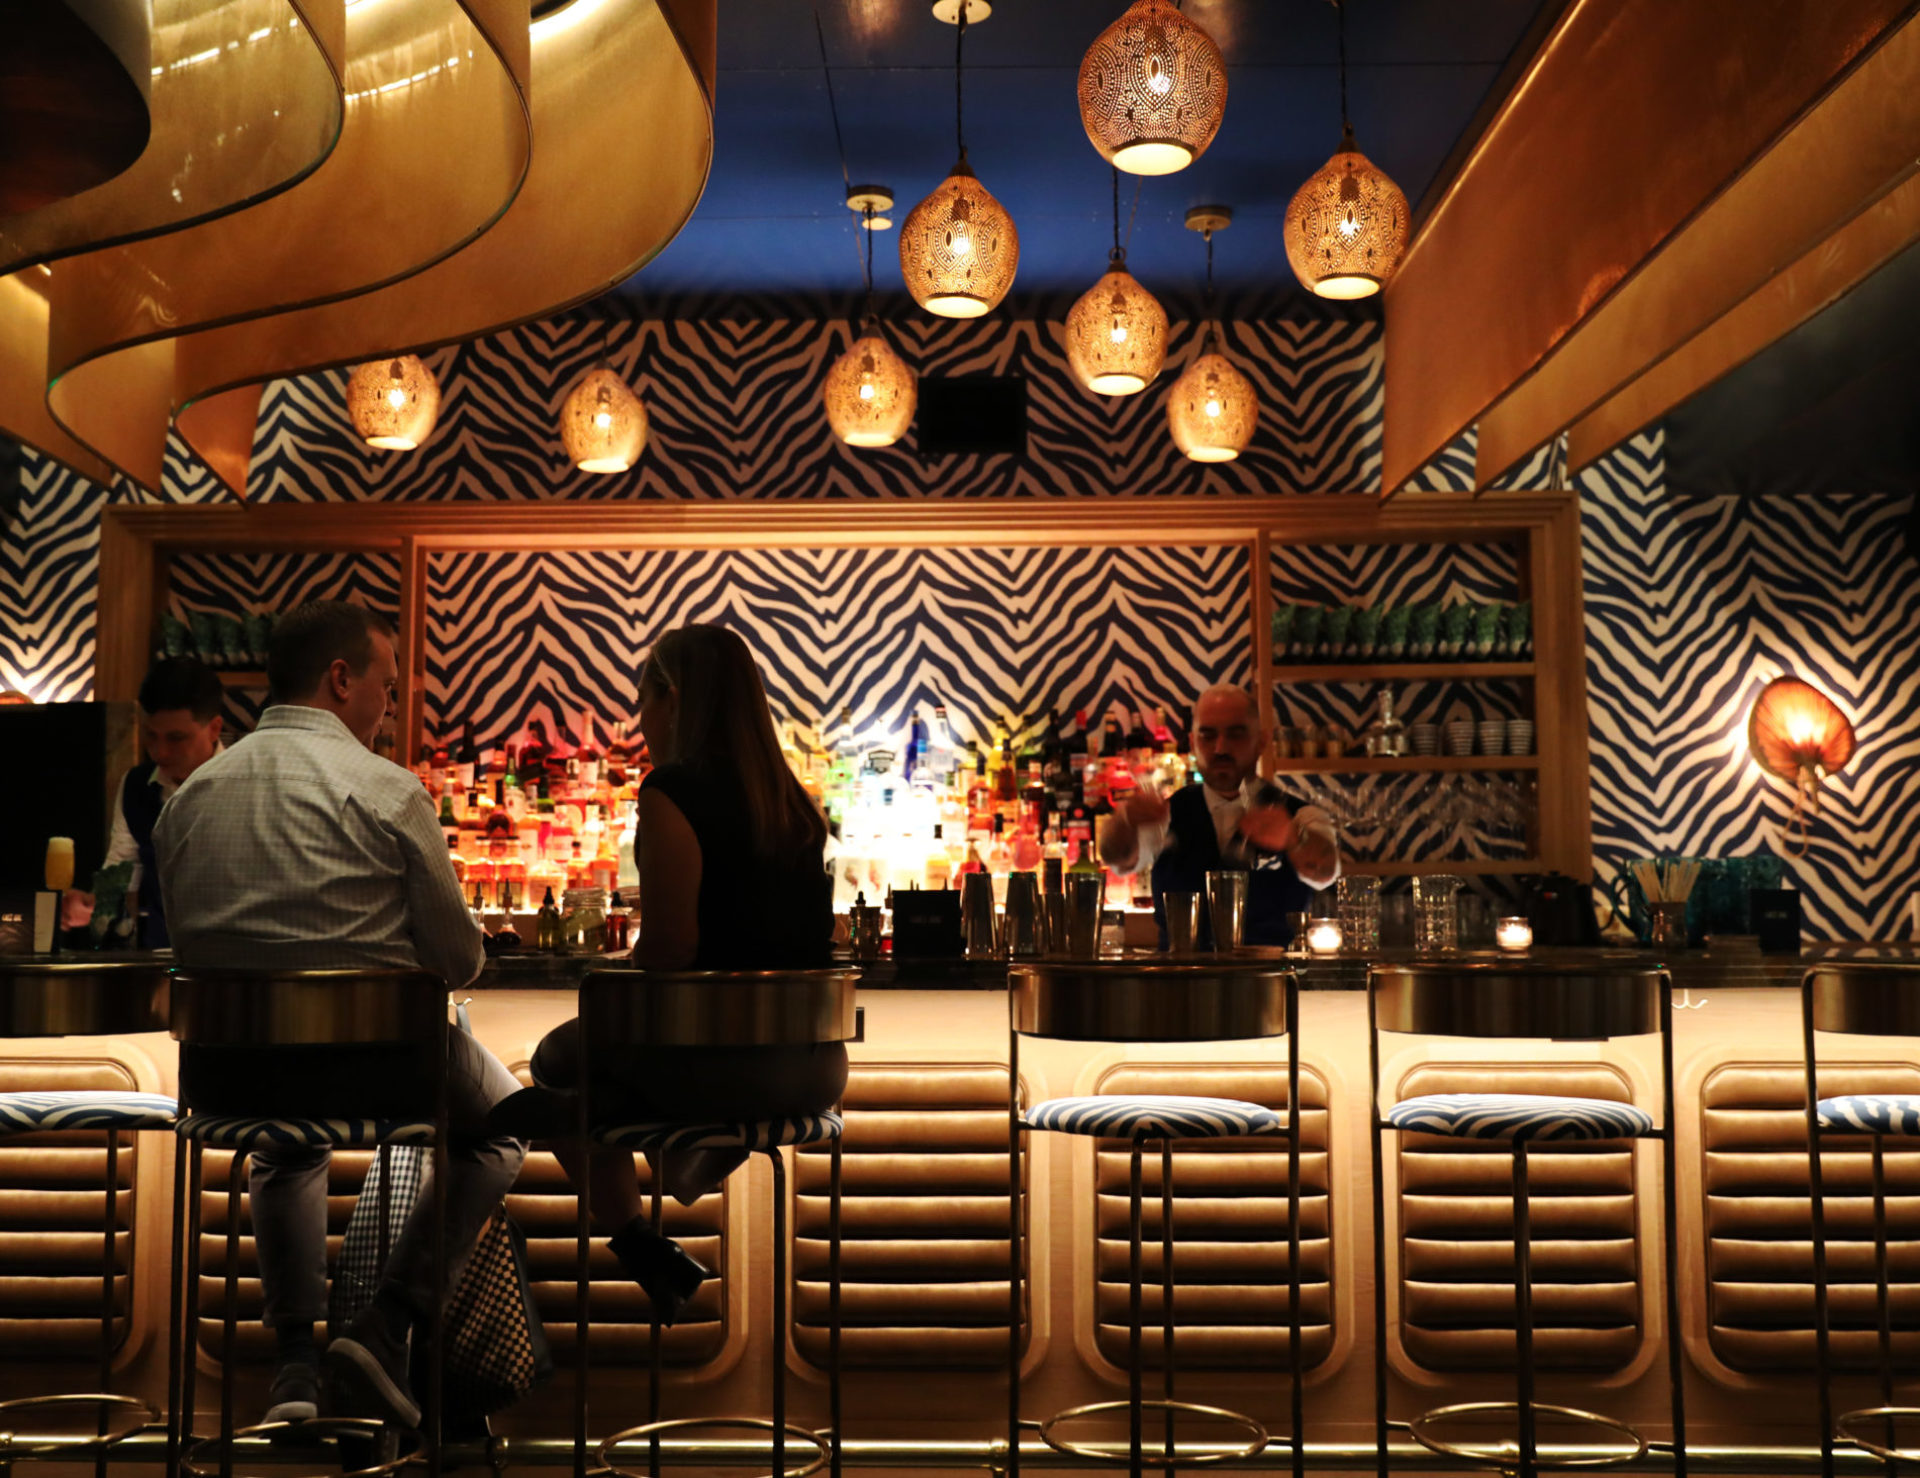 Elegant Cherry Creek hotel bar with a zebra print wall